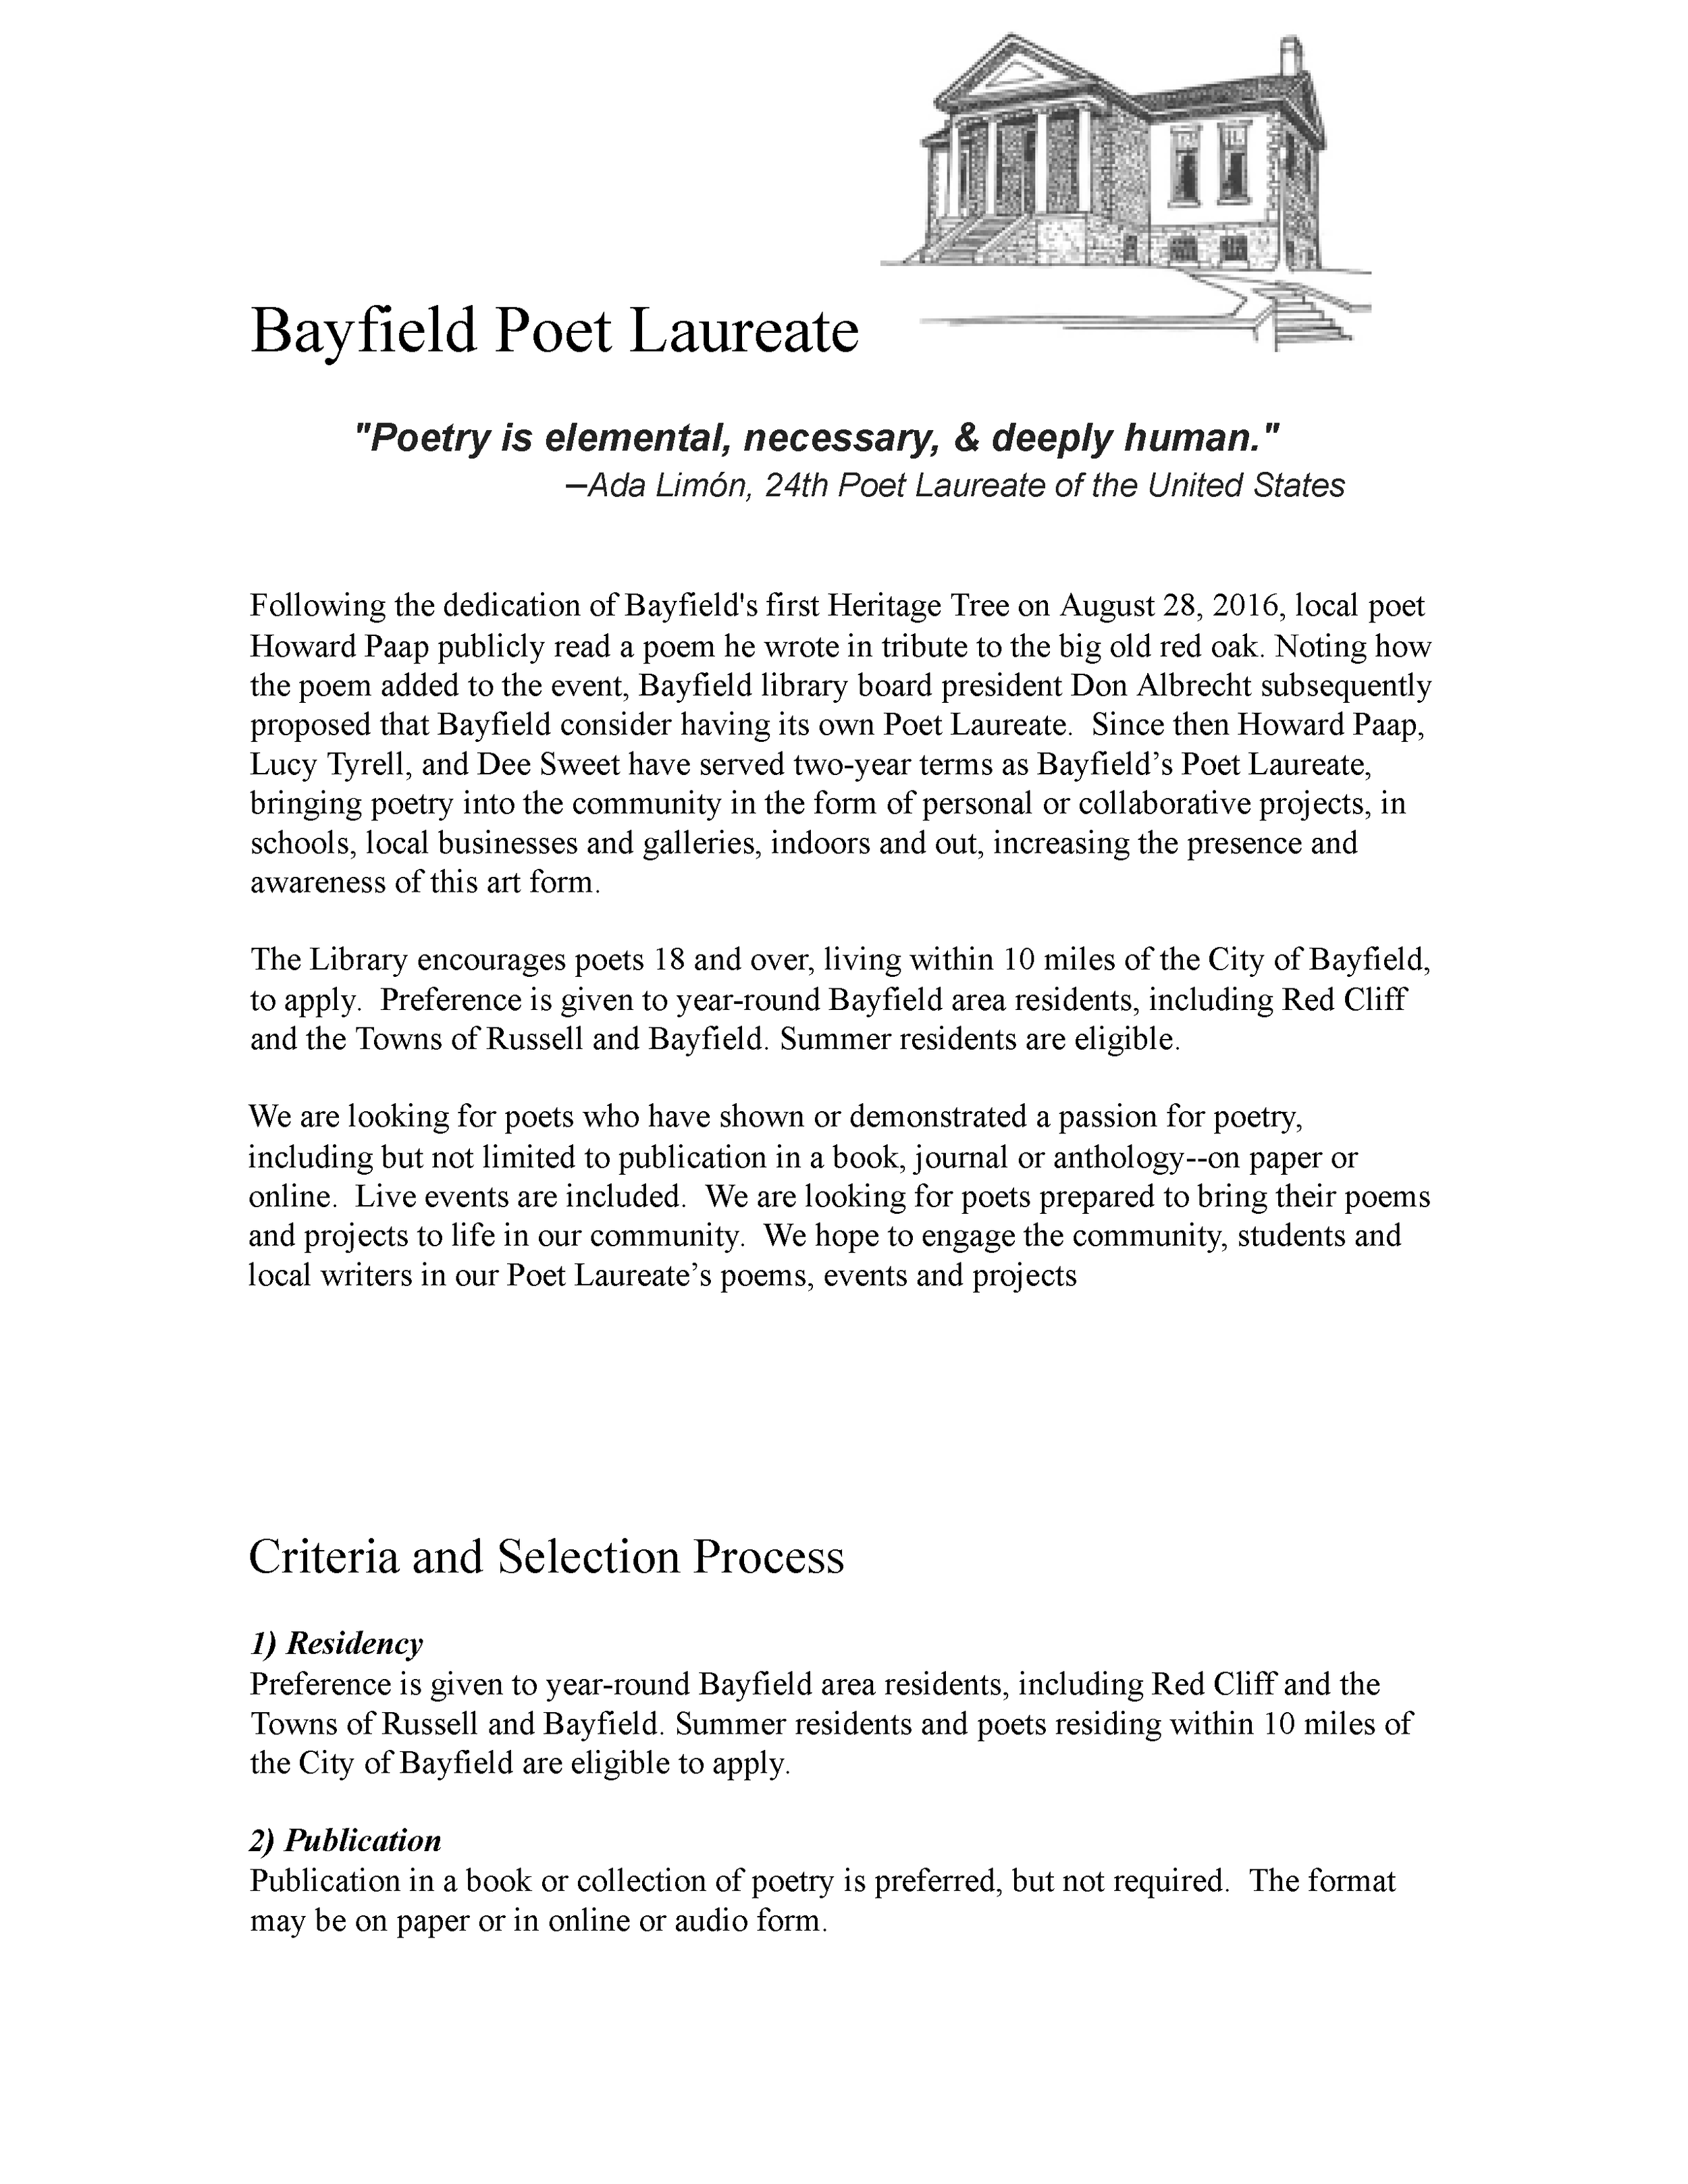 Bayfield Poet LaureatePROCESS_Page_1.png